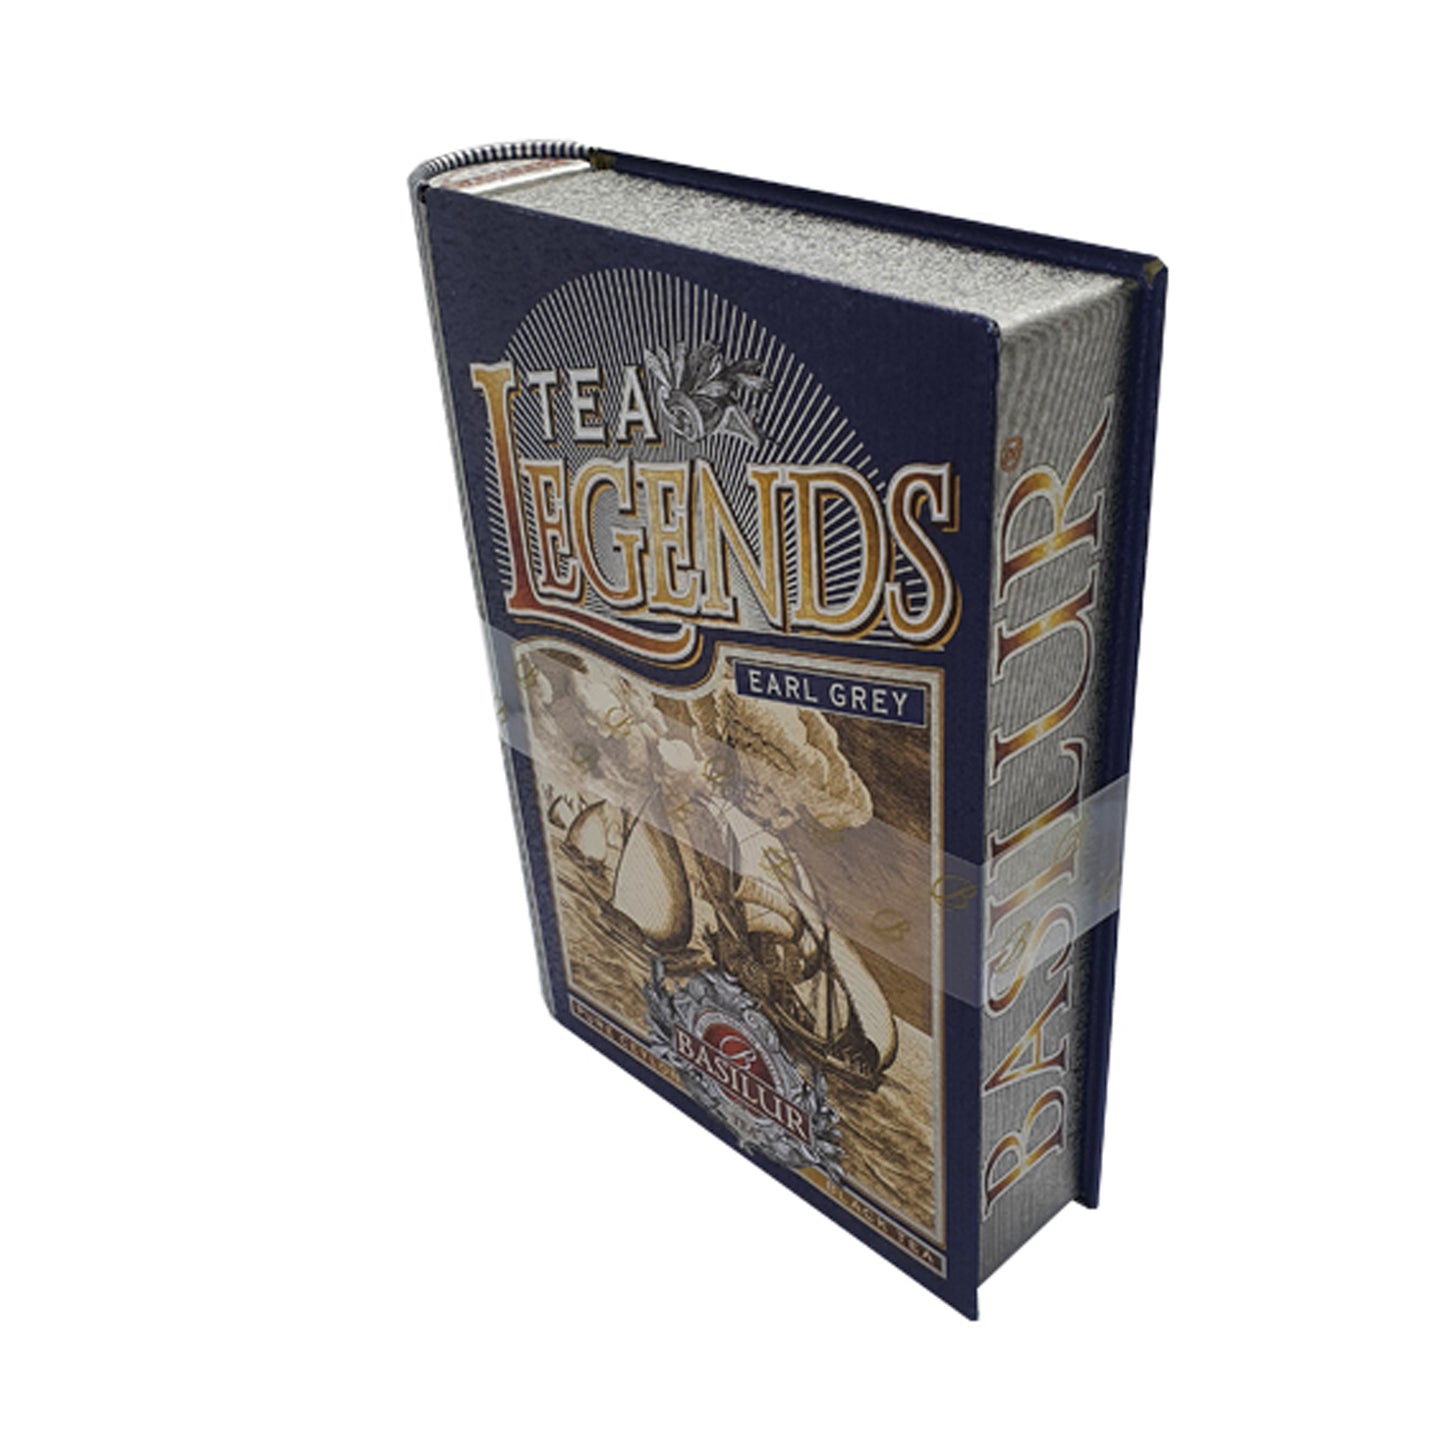 Basilur Tea Book "Tea Legends - Earl Grey" (100g) Caddy